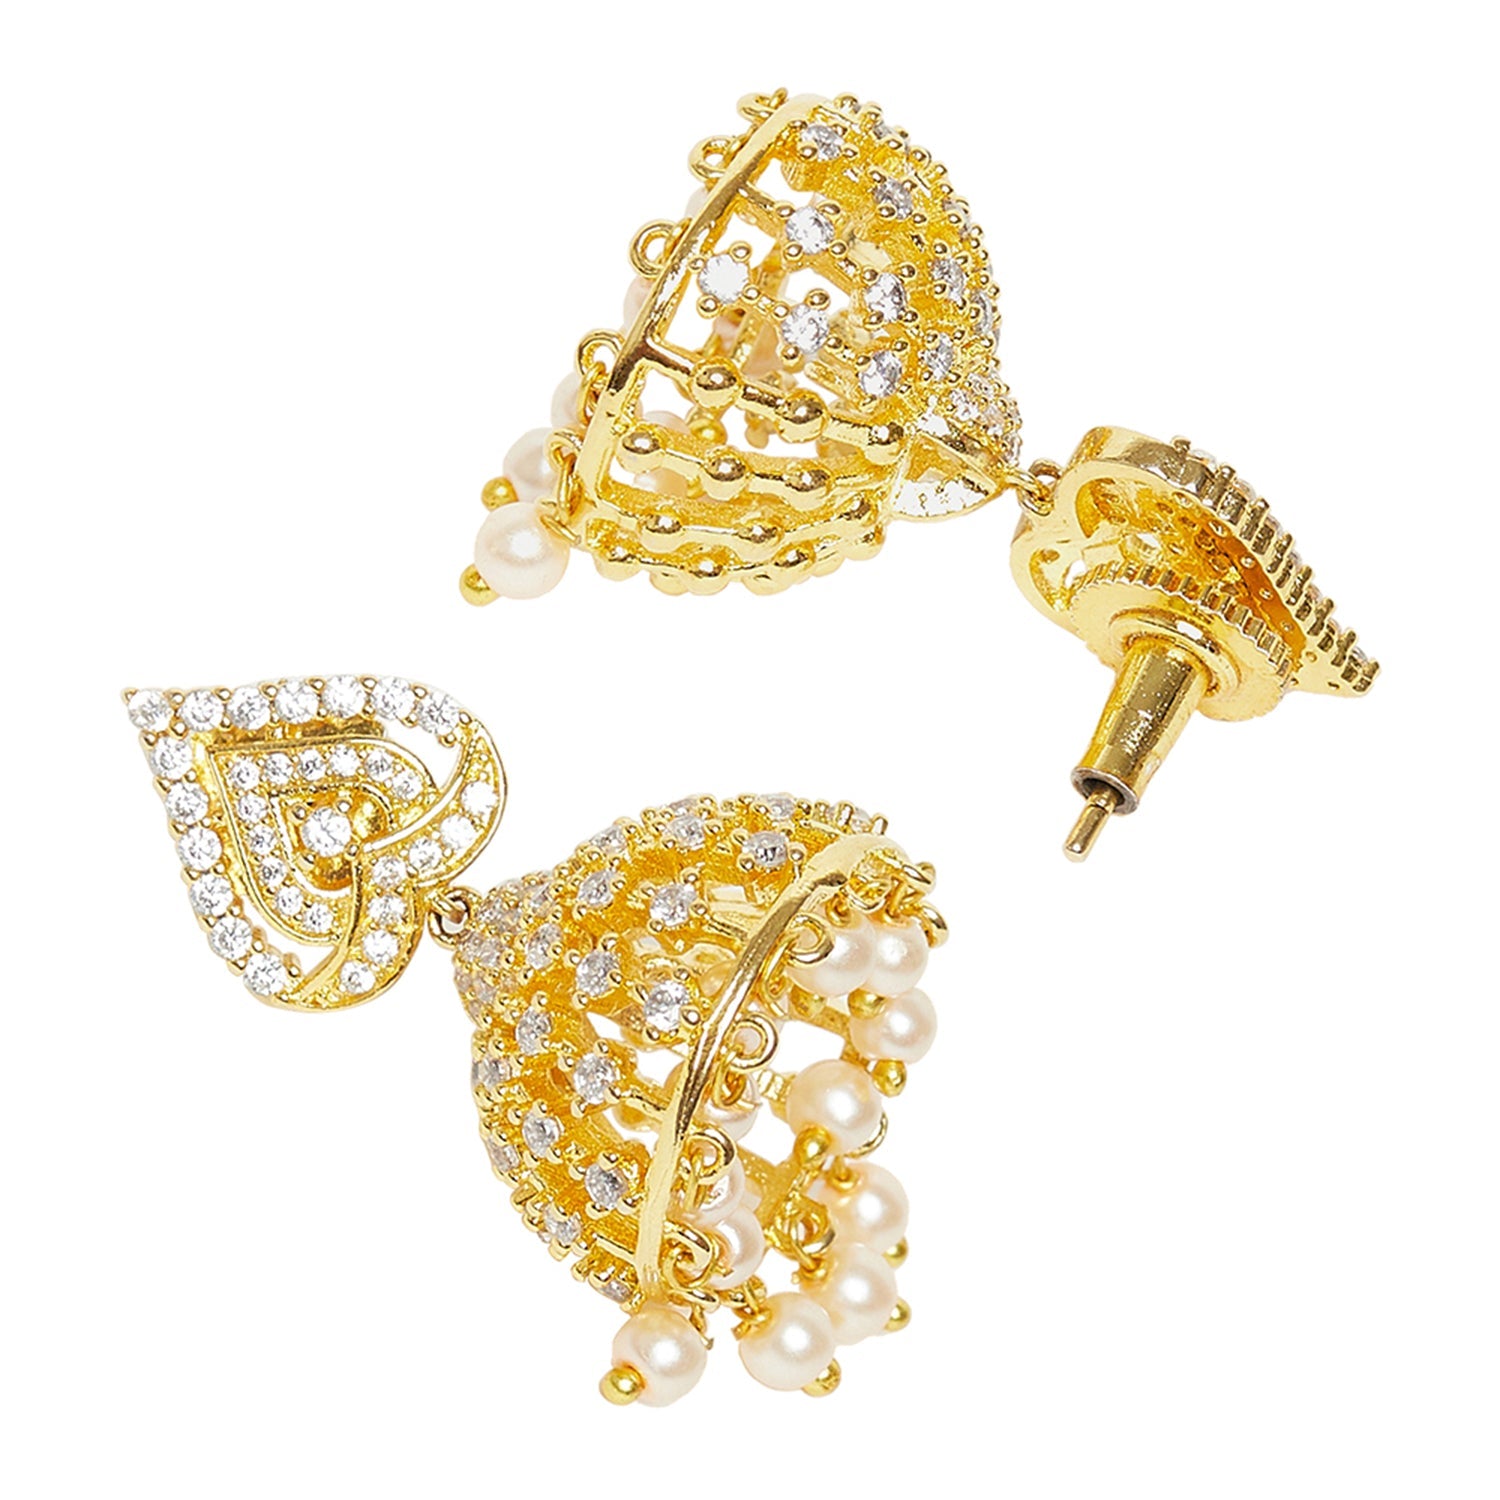 Women's Pearl Beads Embellished Astonishing Jhumki Earrings Pair - Voylla